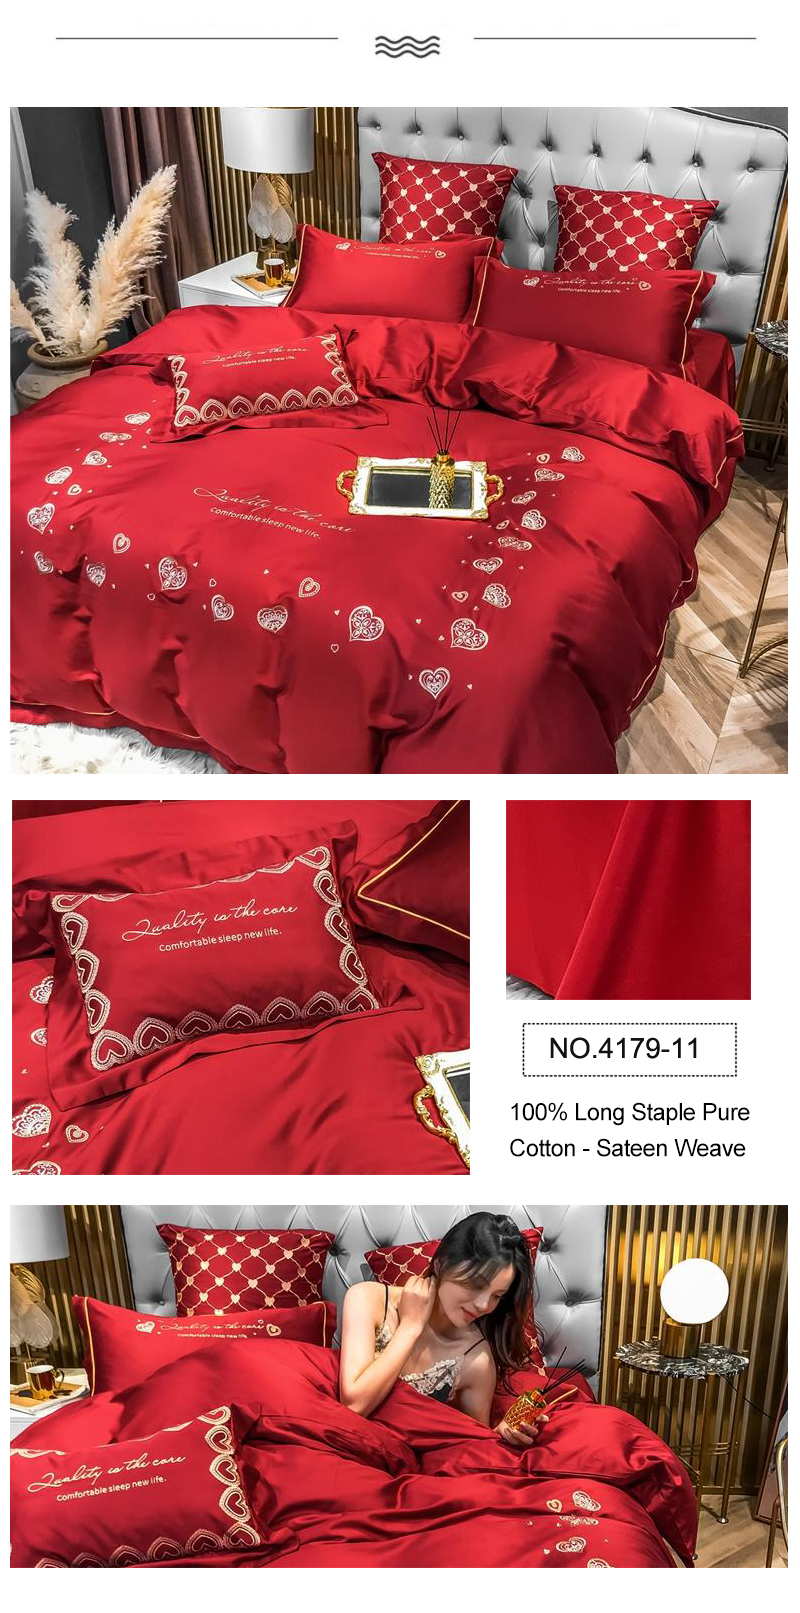 100% Long Staple Cotton Deluxe Bed Sheet Set